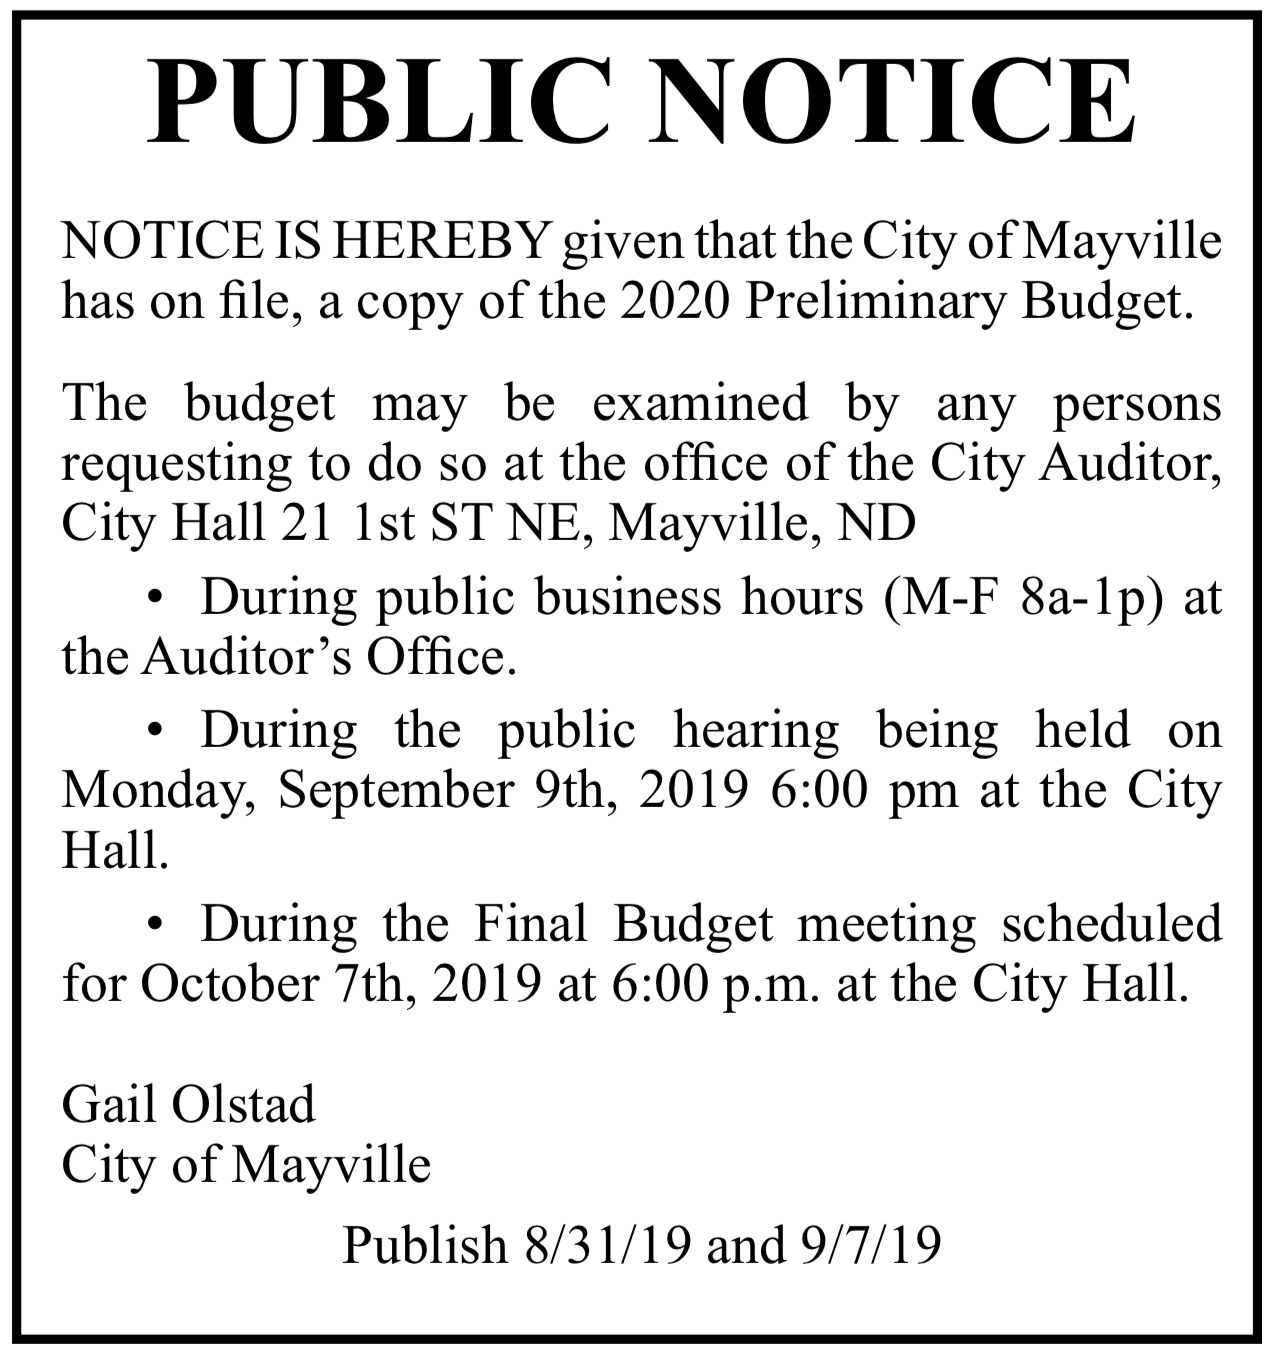 Public Notice - City of Mayville Preliminary 2020 Budget